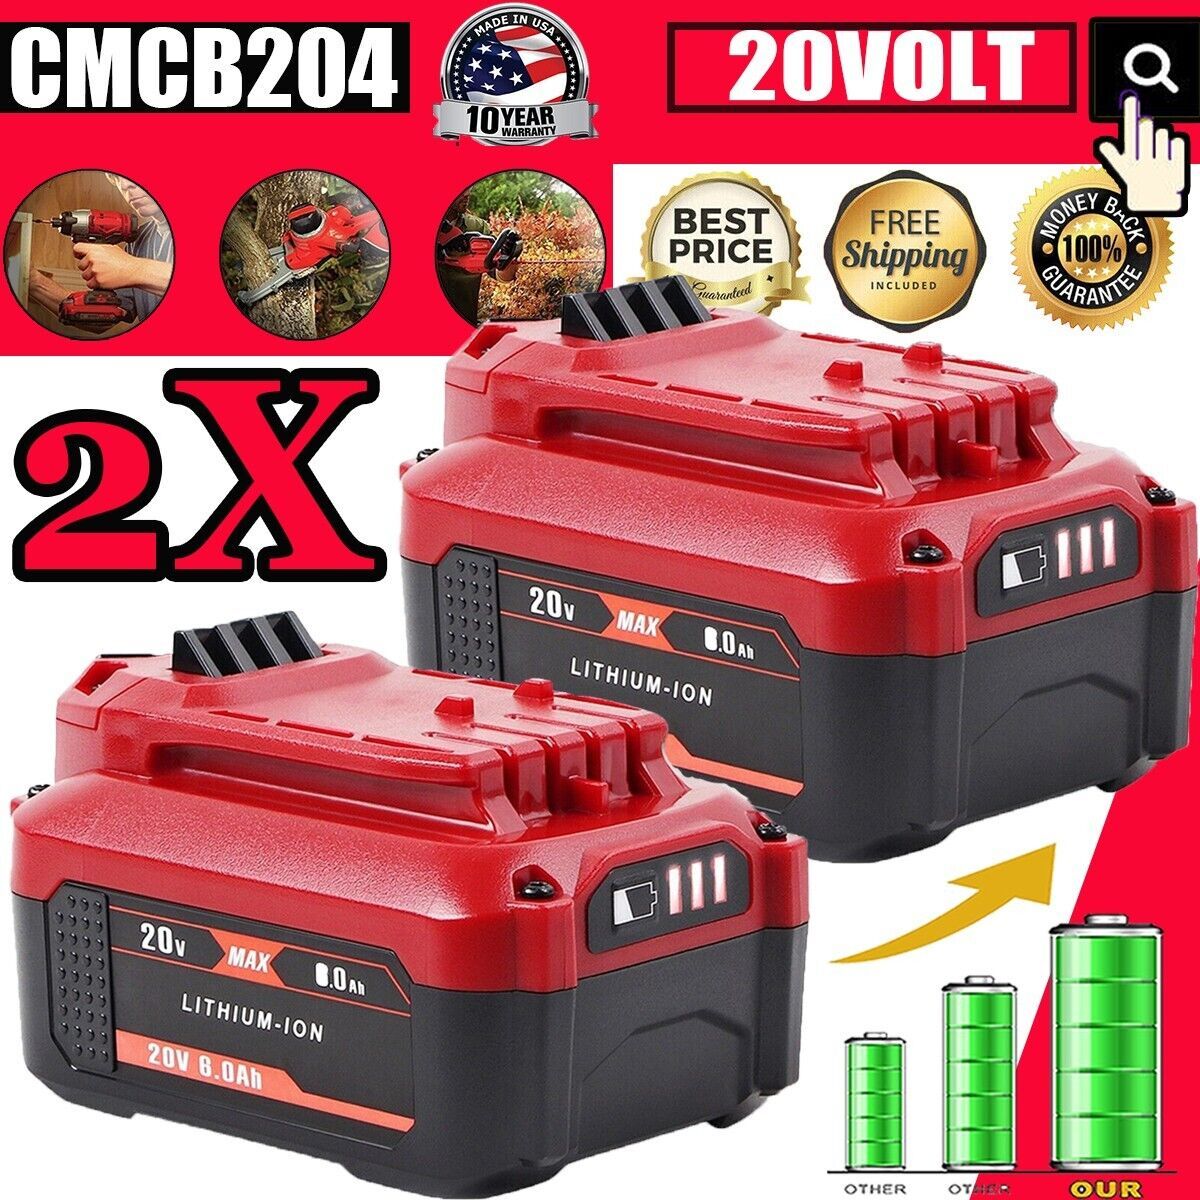 2pack For Craftsman V20 Li-Ion Battery 6.0Ah 20 Volt Max CMCB206 CMCB204 CMCB202 - $86.99